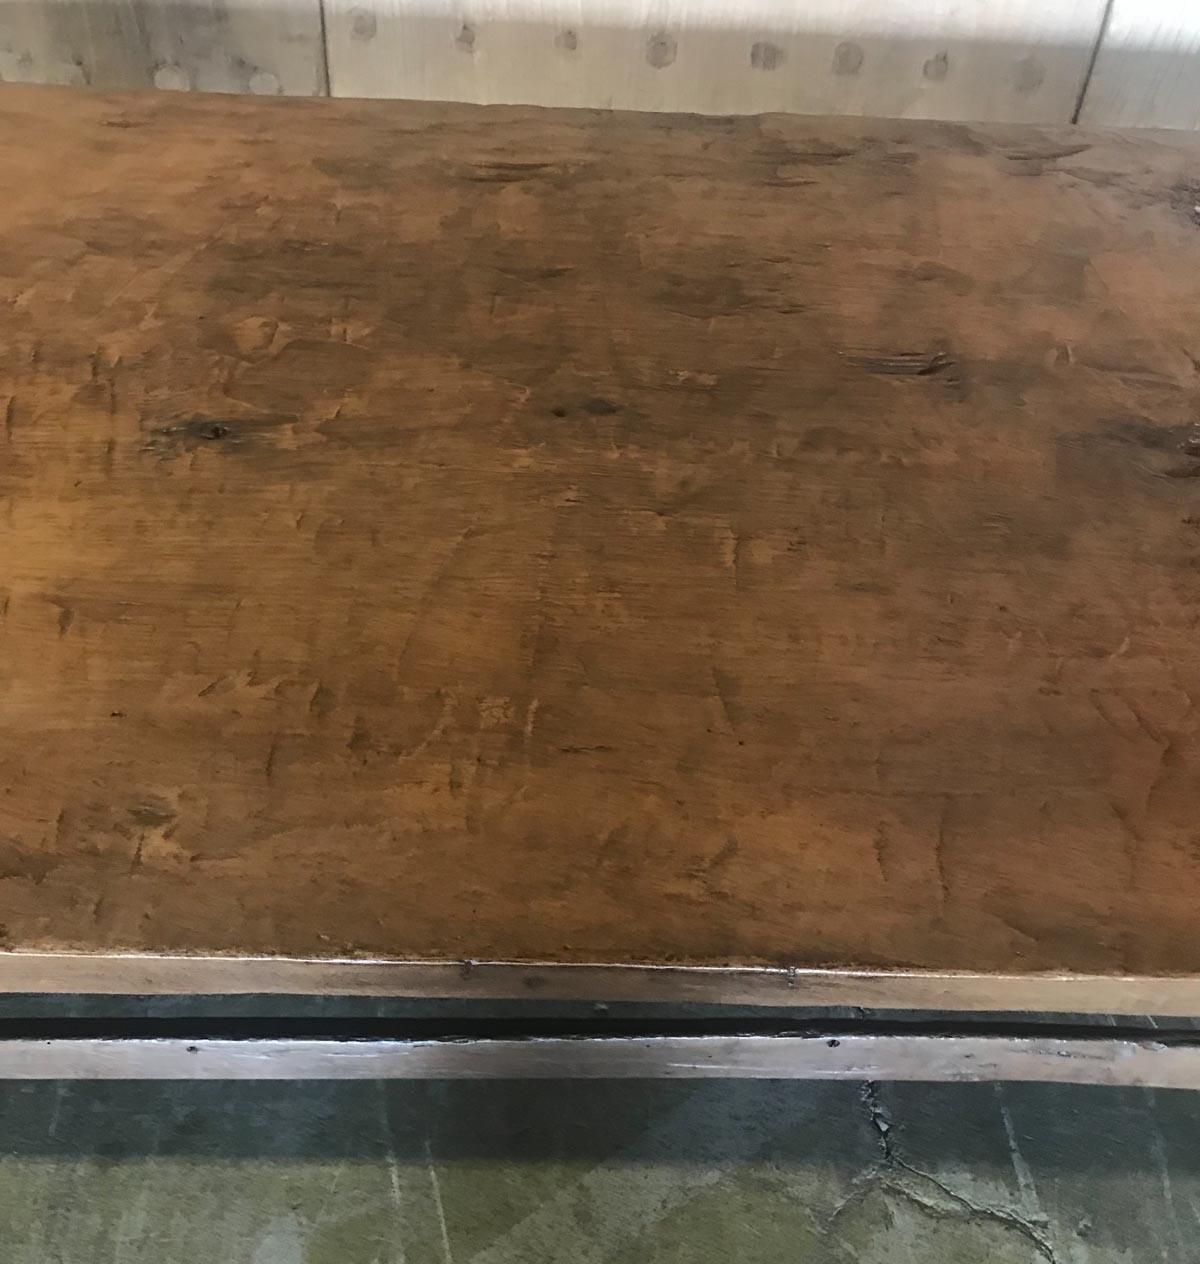 Wood Rustic One Wide Board Coffee Table